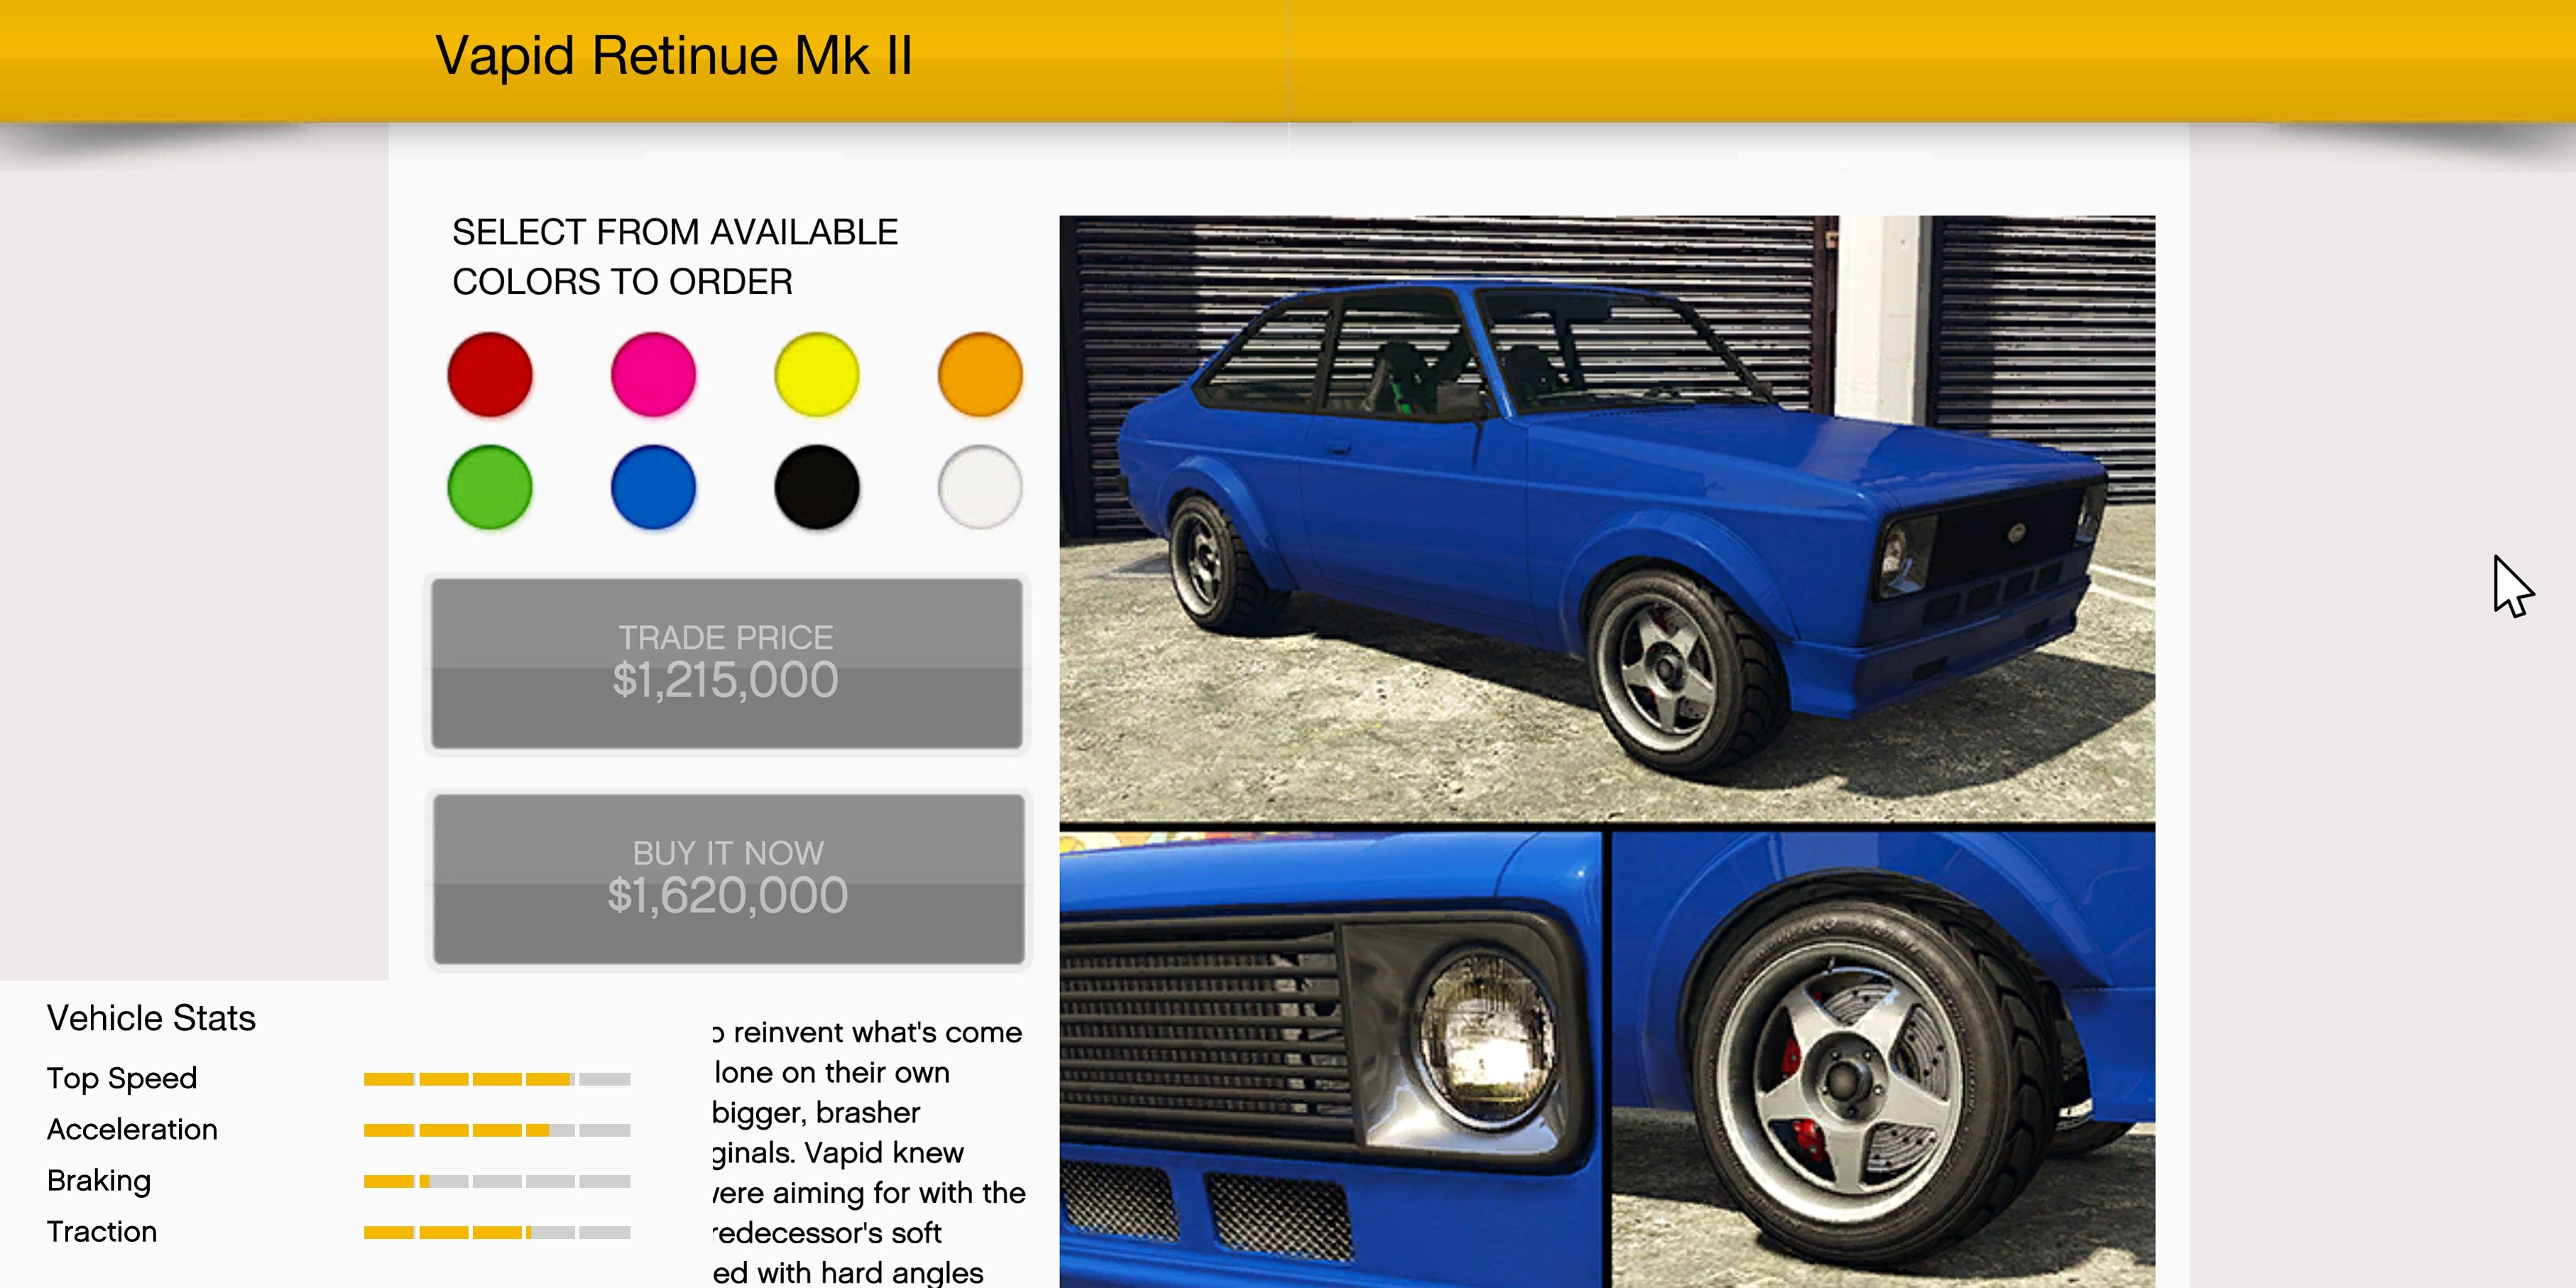 The Vapid Retinue MK II for sale in GTA Online